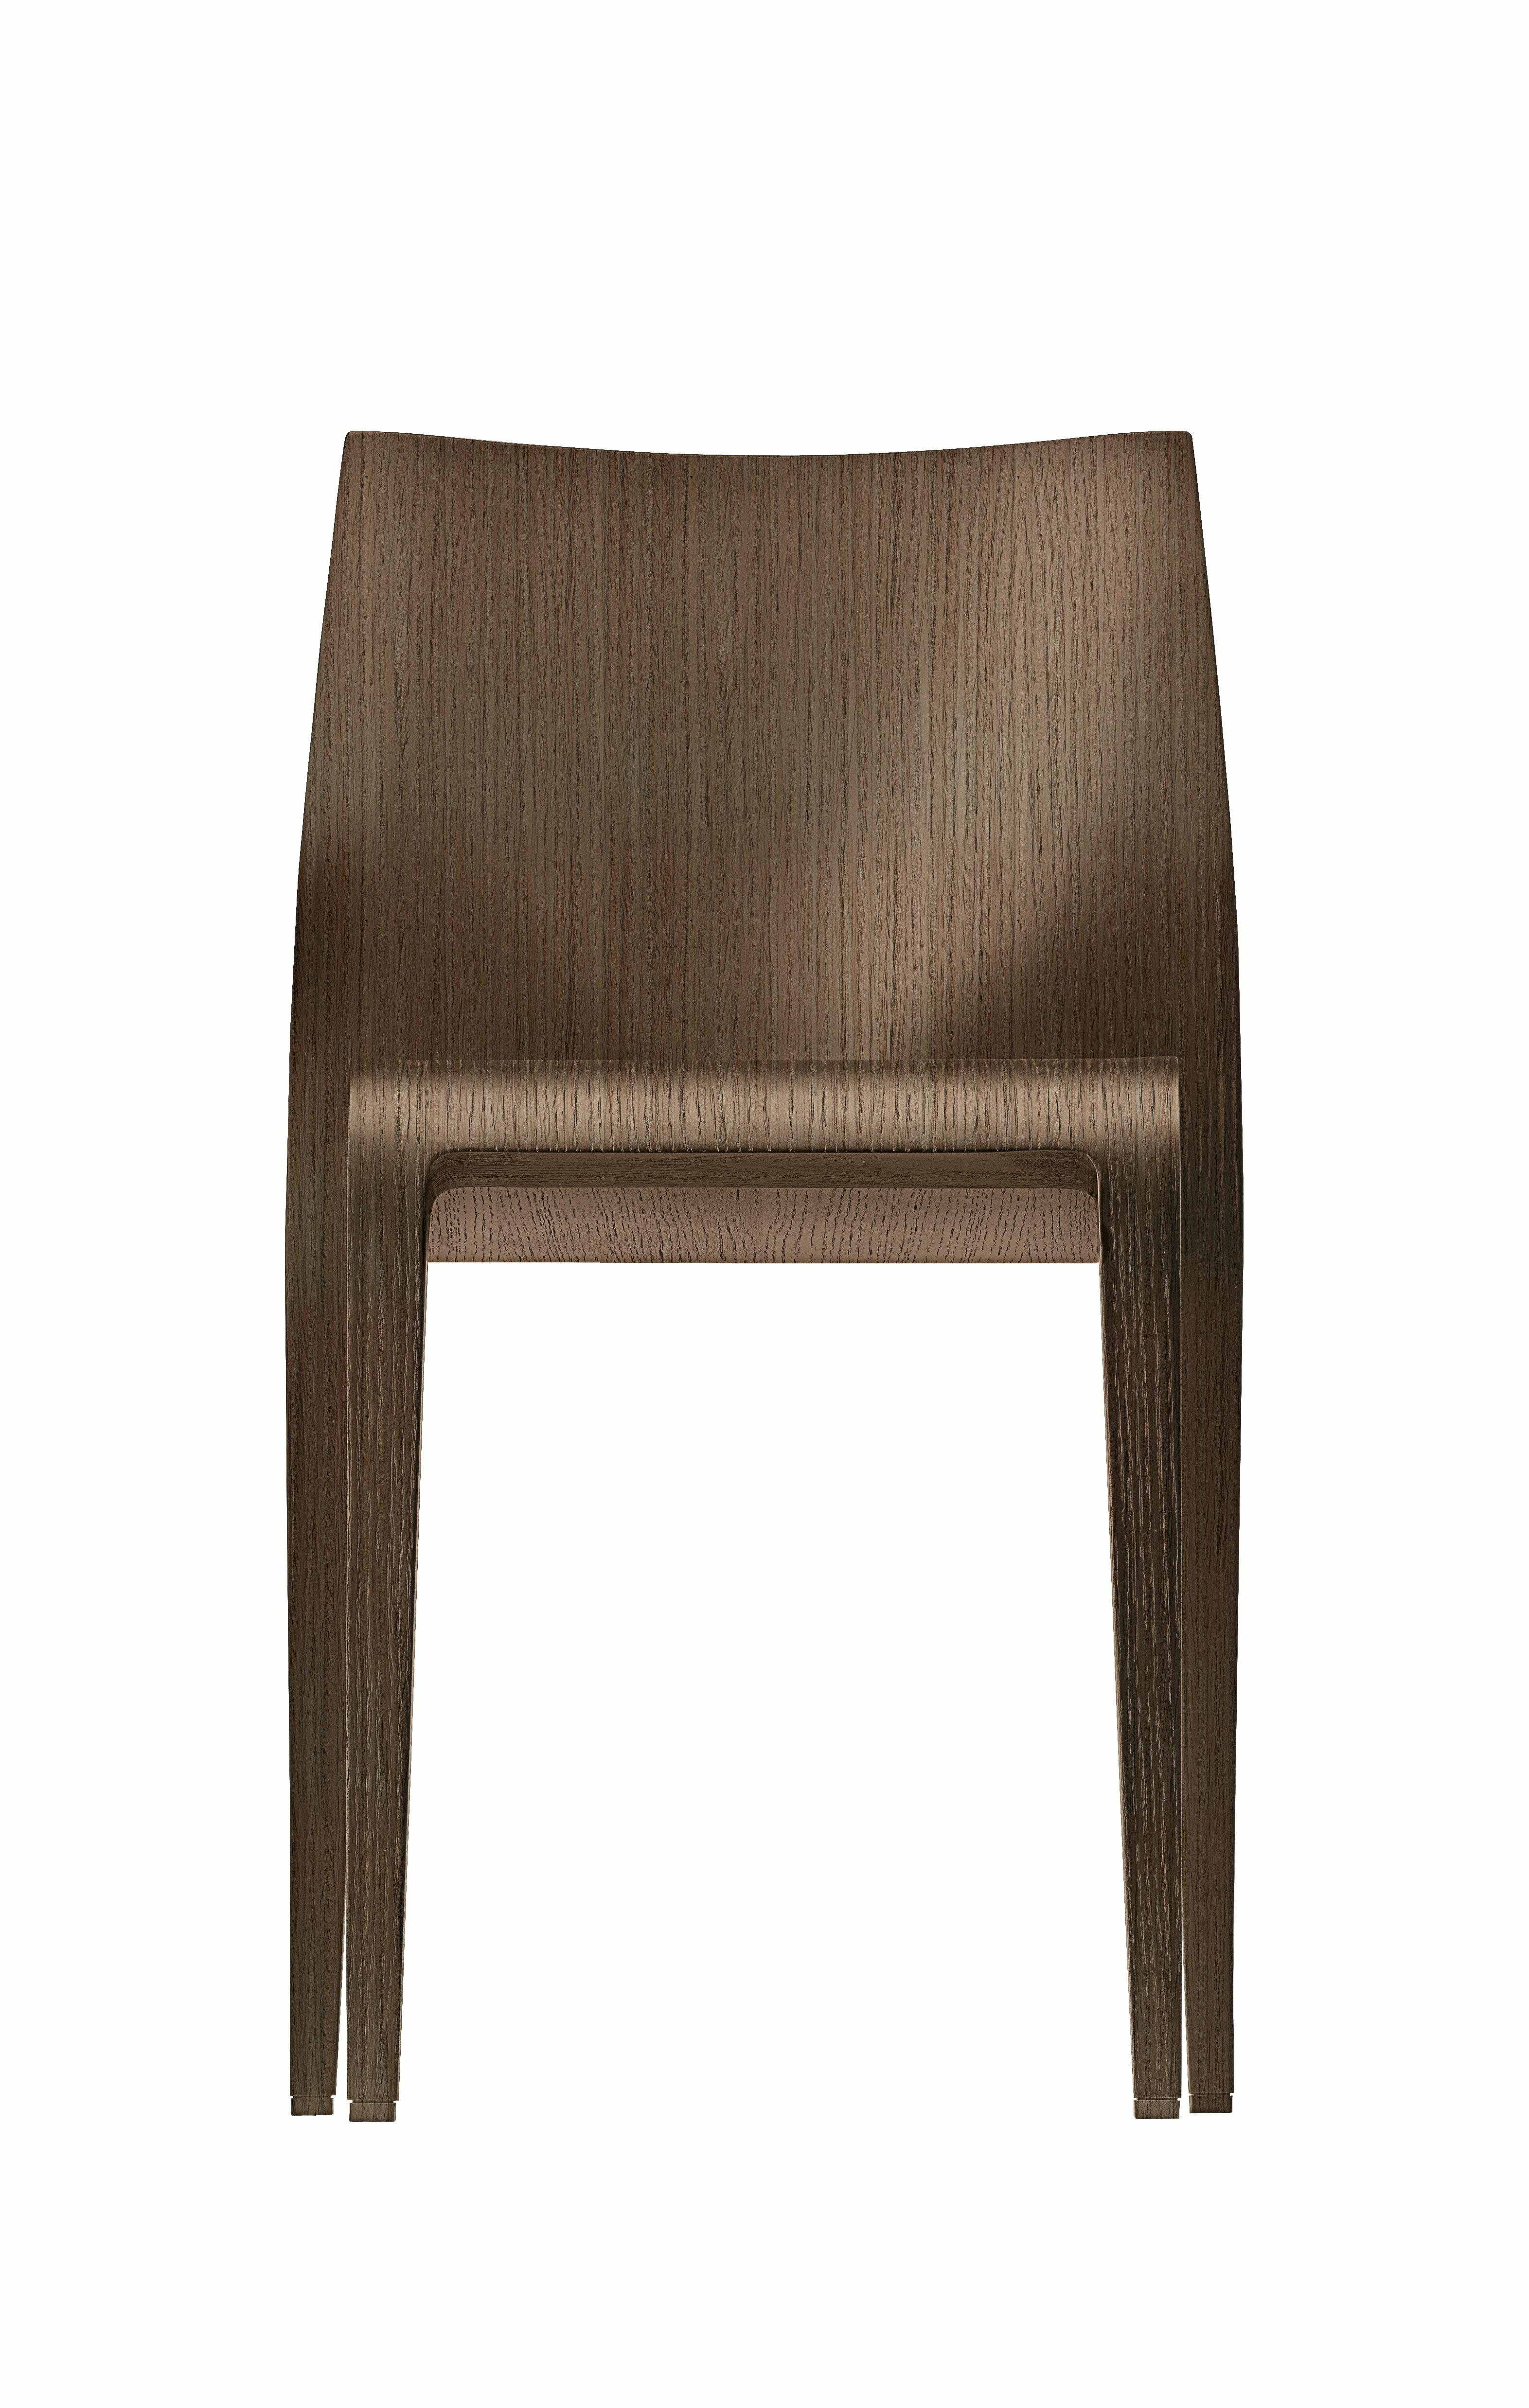 Italian Alias 301 Laleggera Chair in Oak Canaletto Walnut Wood by Riccardo Blumer For Sale